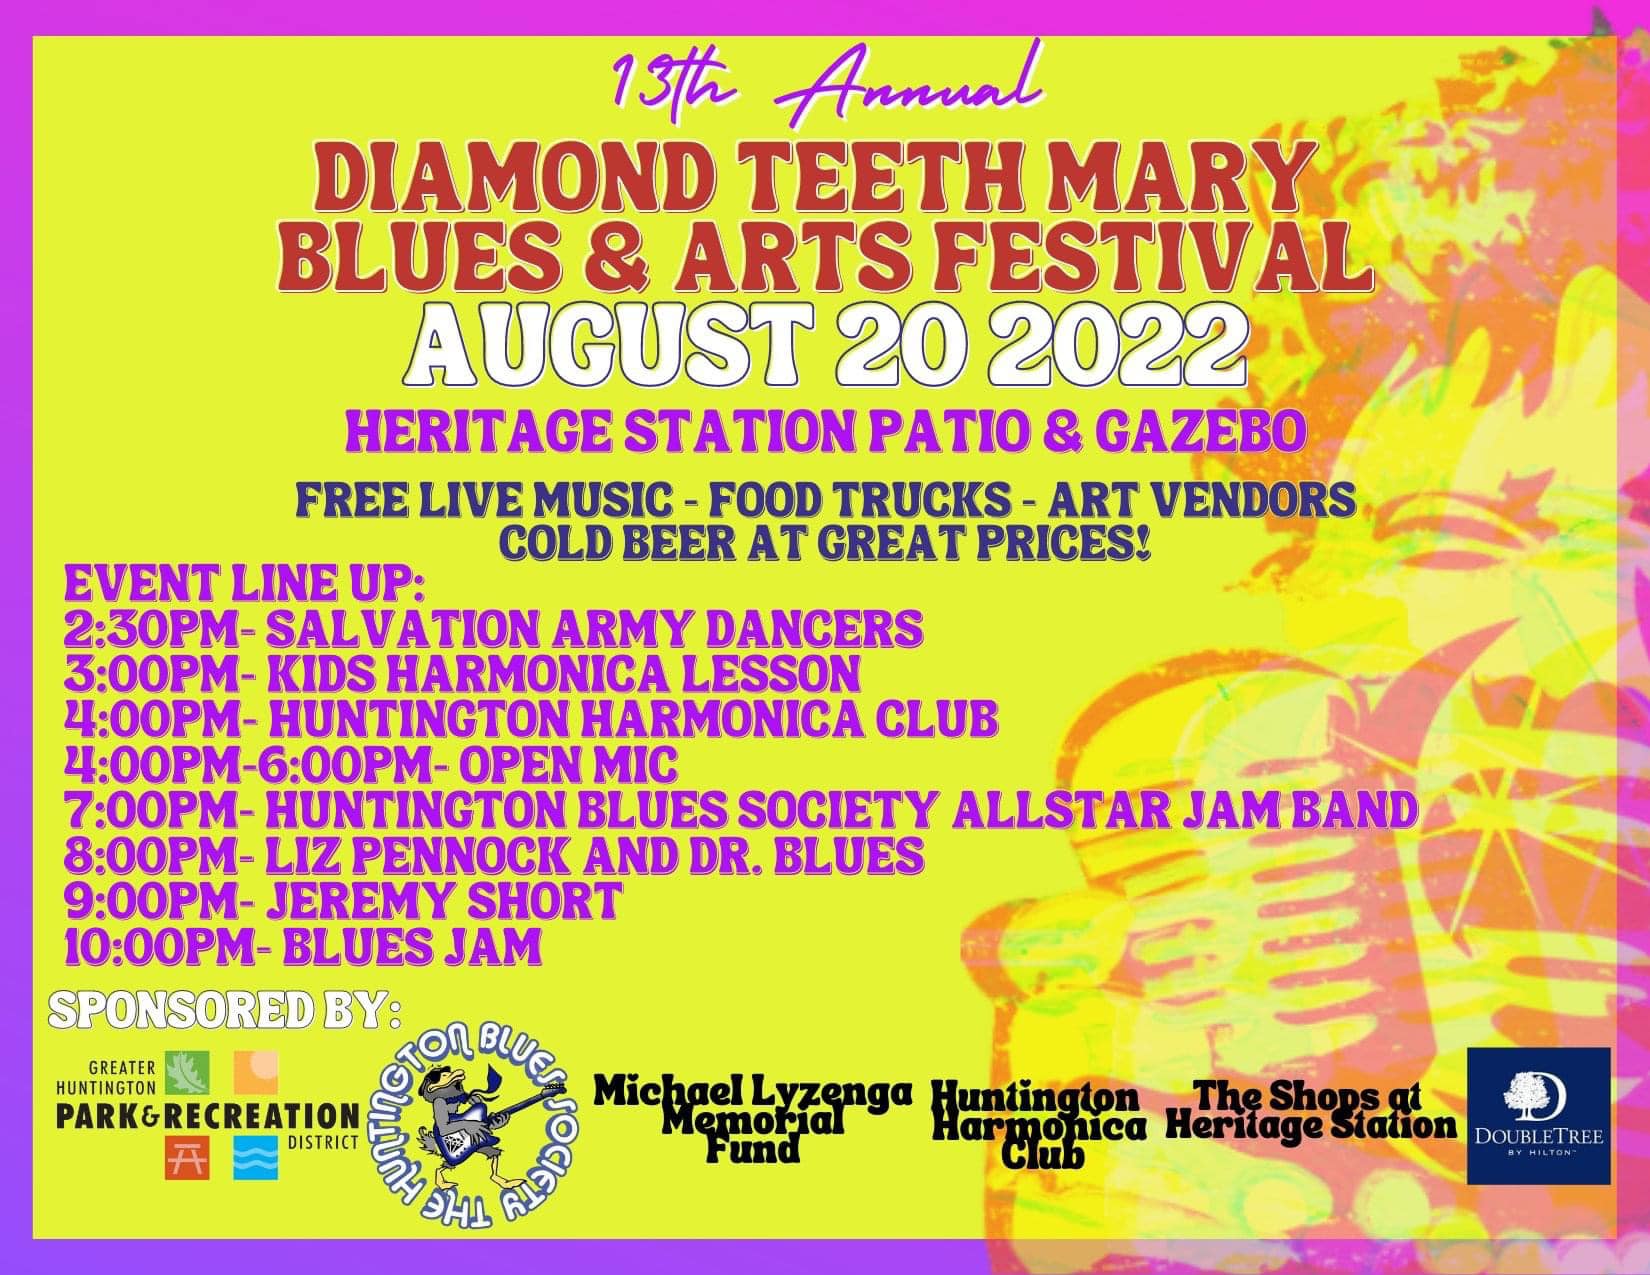 Annual Diamond Teeth Mary Festival Returns To Heritage Station Aug 20